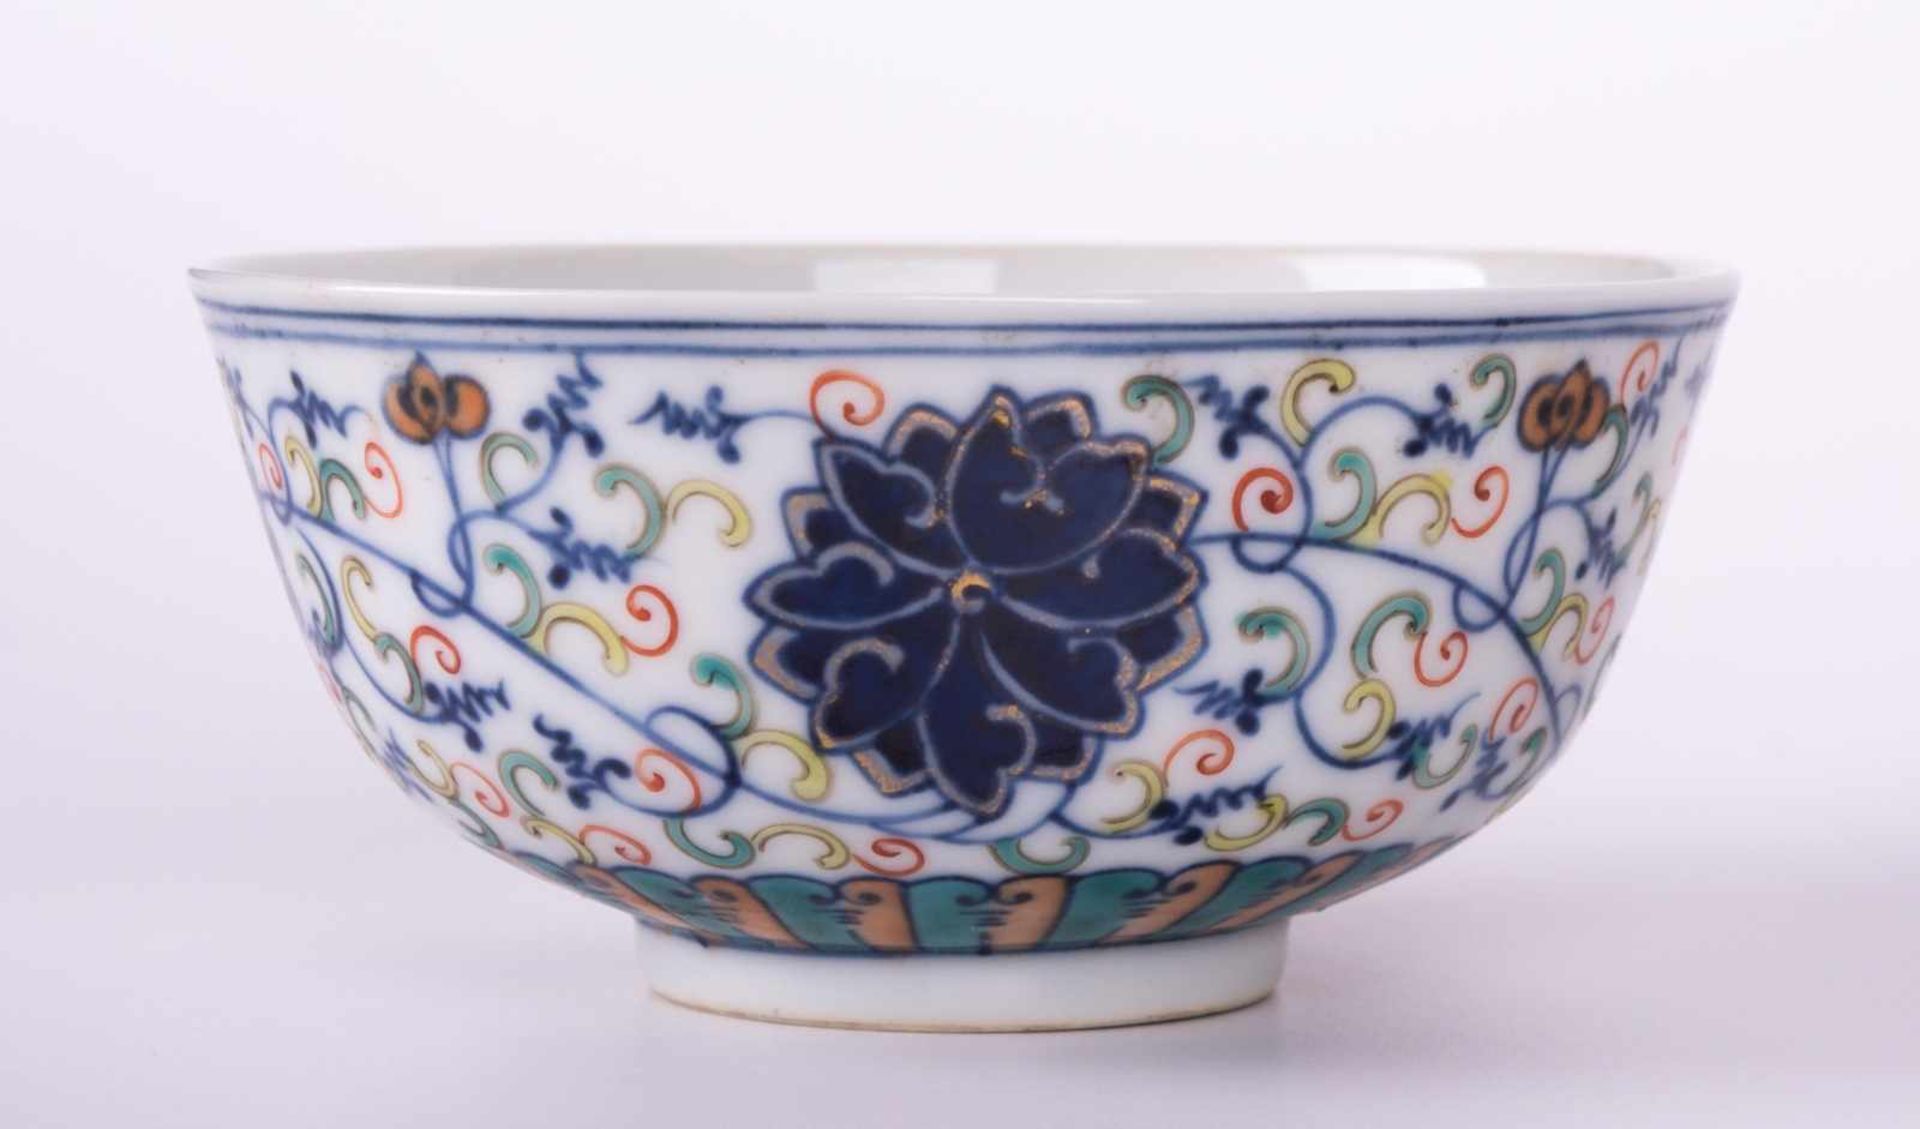 Porzellan Schale China 19. Jhd./20. Jhd. / Porcelain bowl, China 19th/20th century Polychrom